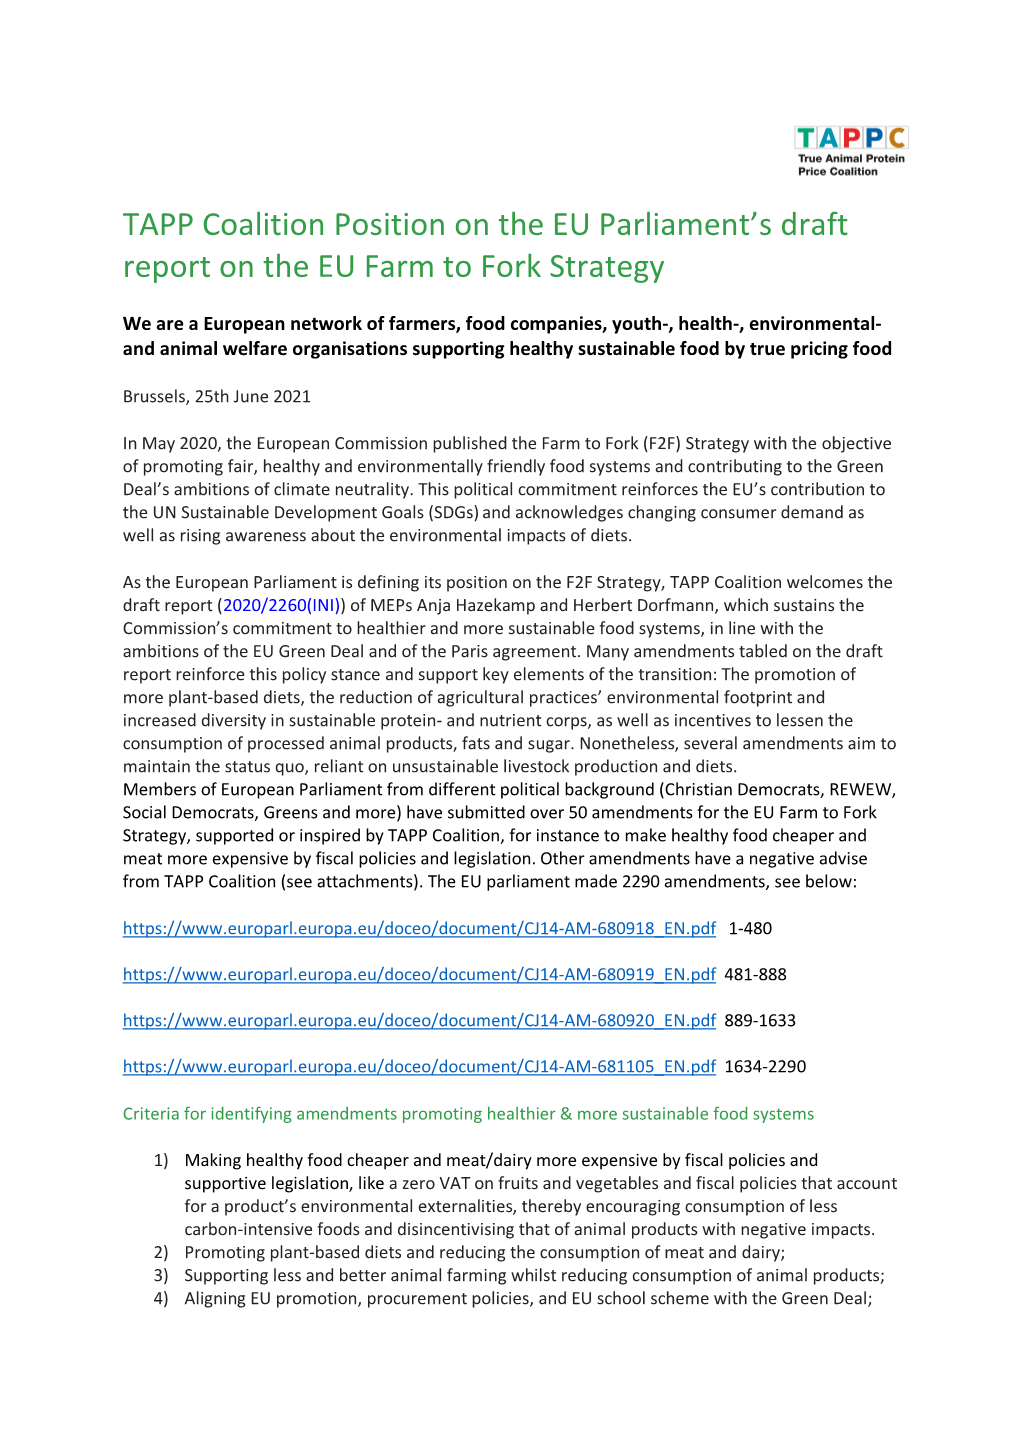 Amendments EU Farm to Fork Strategy